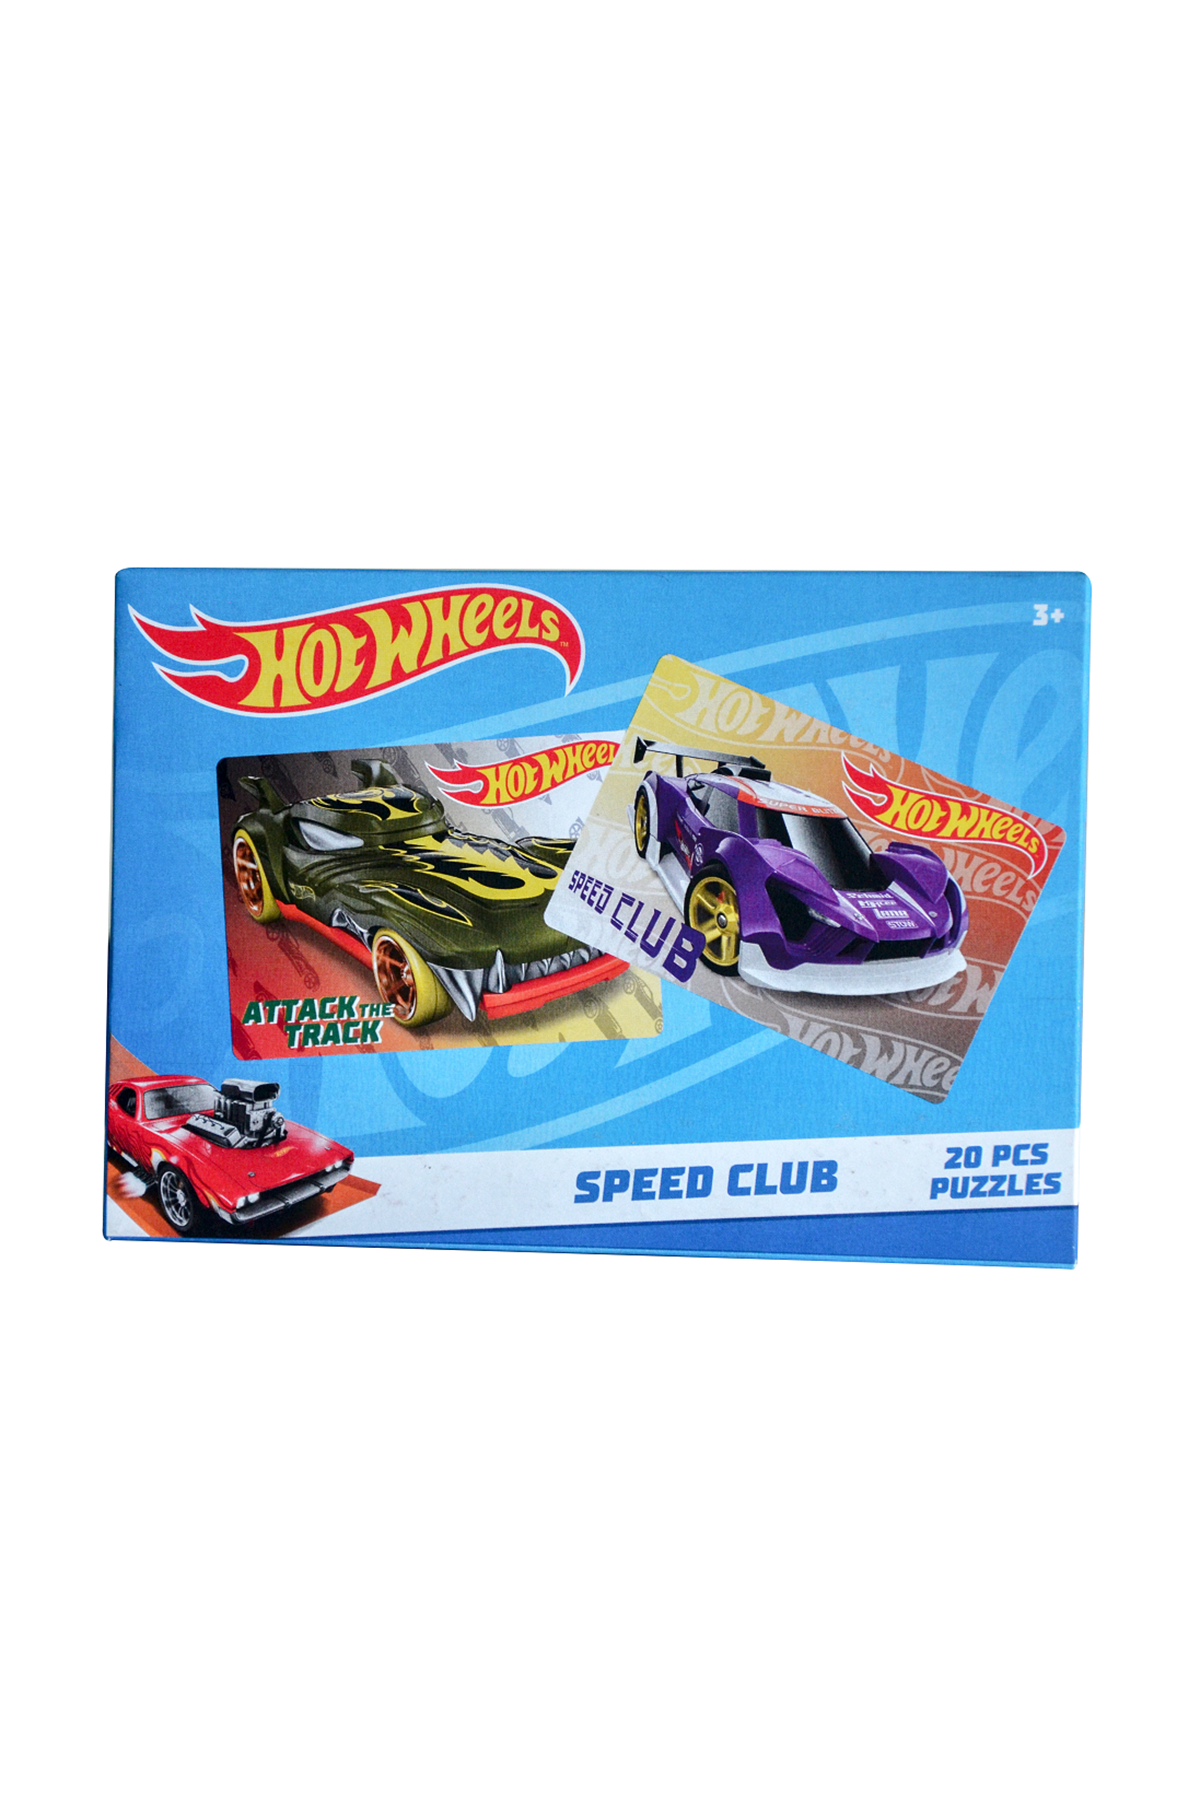 Hot Wheels Speed Club Puzzle 20pcs x 2